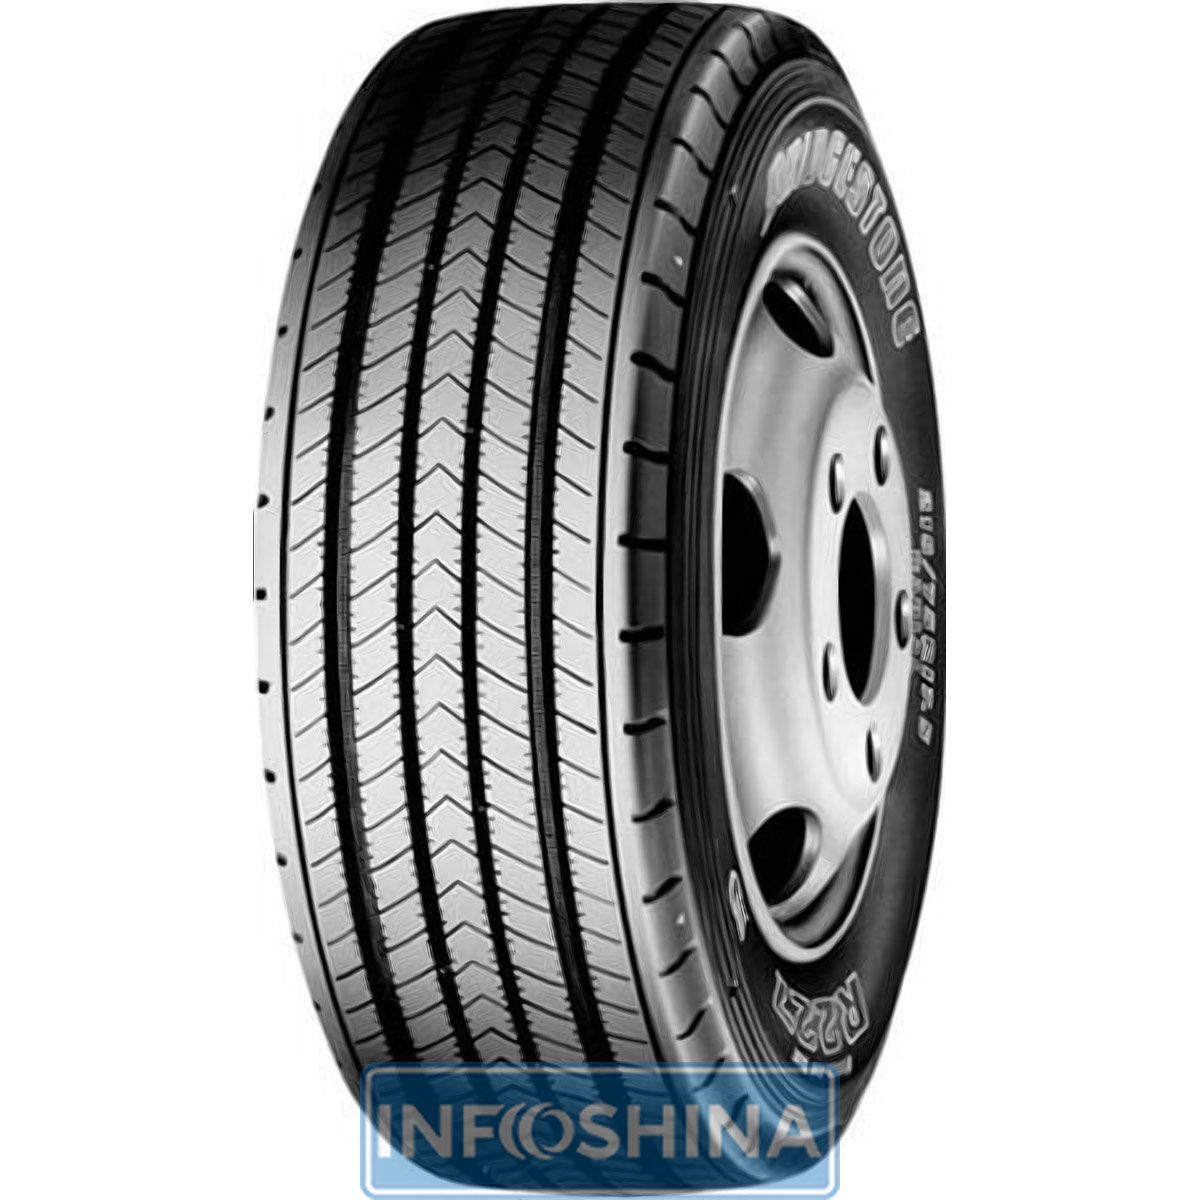 Купить шины Bridgestone R227 (рулевая ось) 305/70 R22.5 148/145M